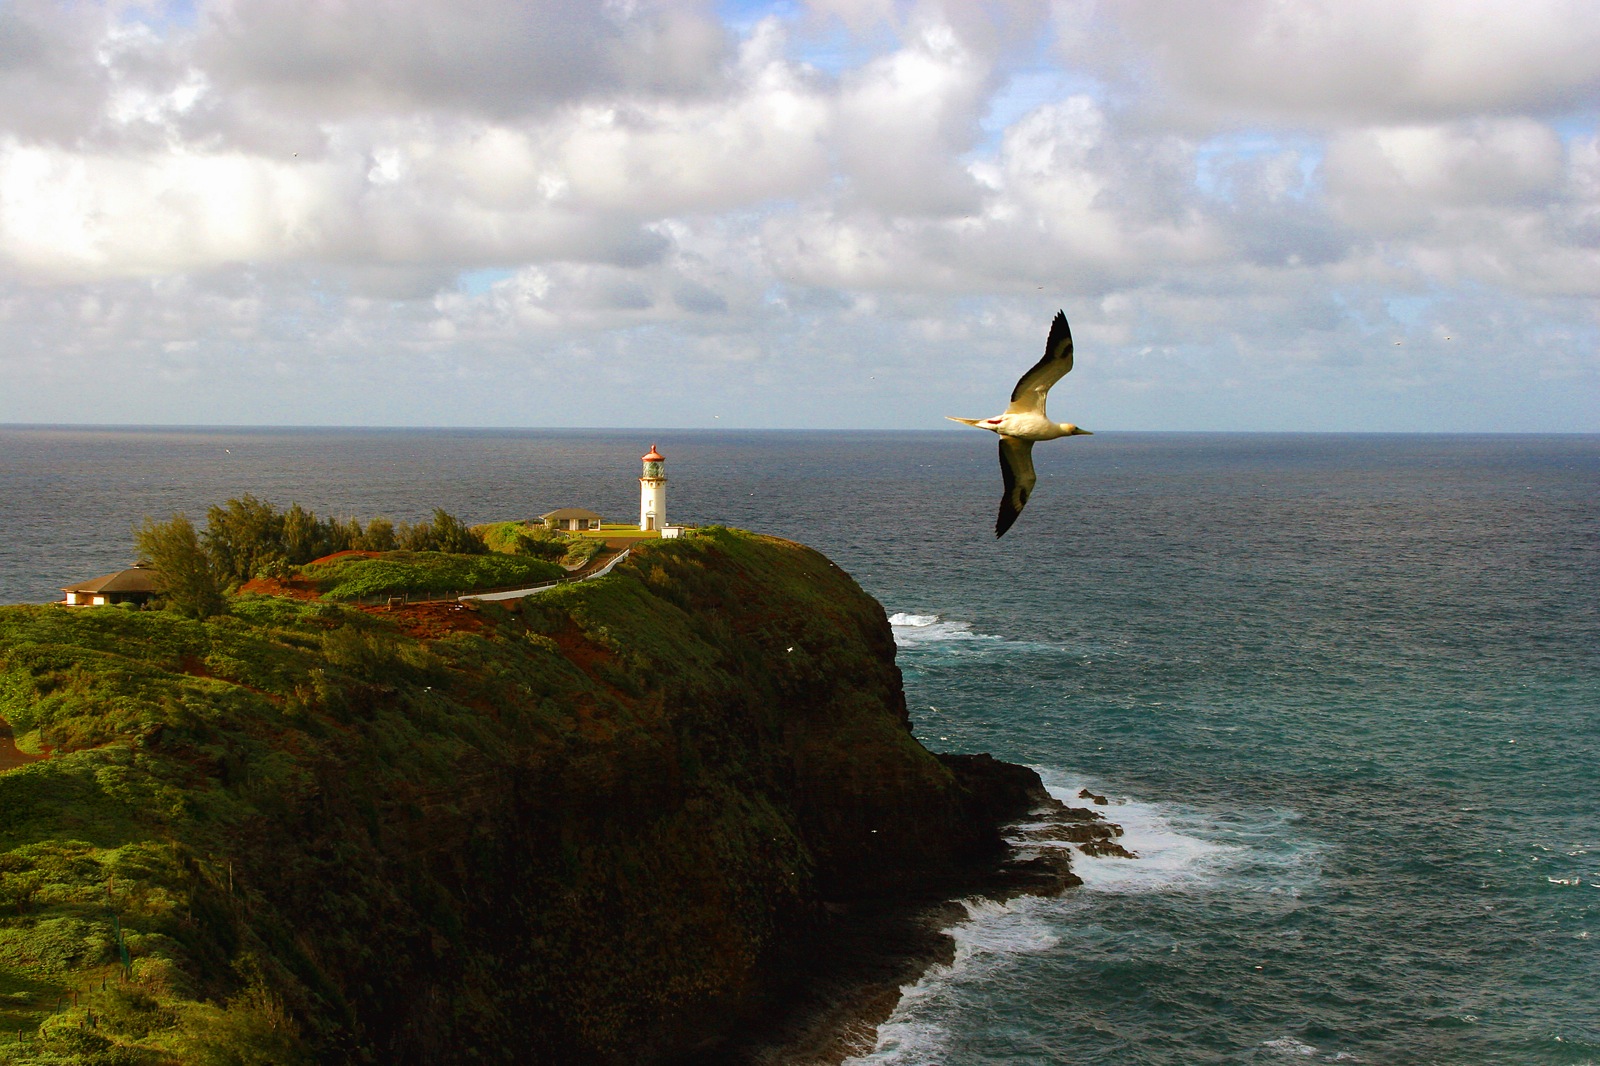 Kilauea lighthouse and booby